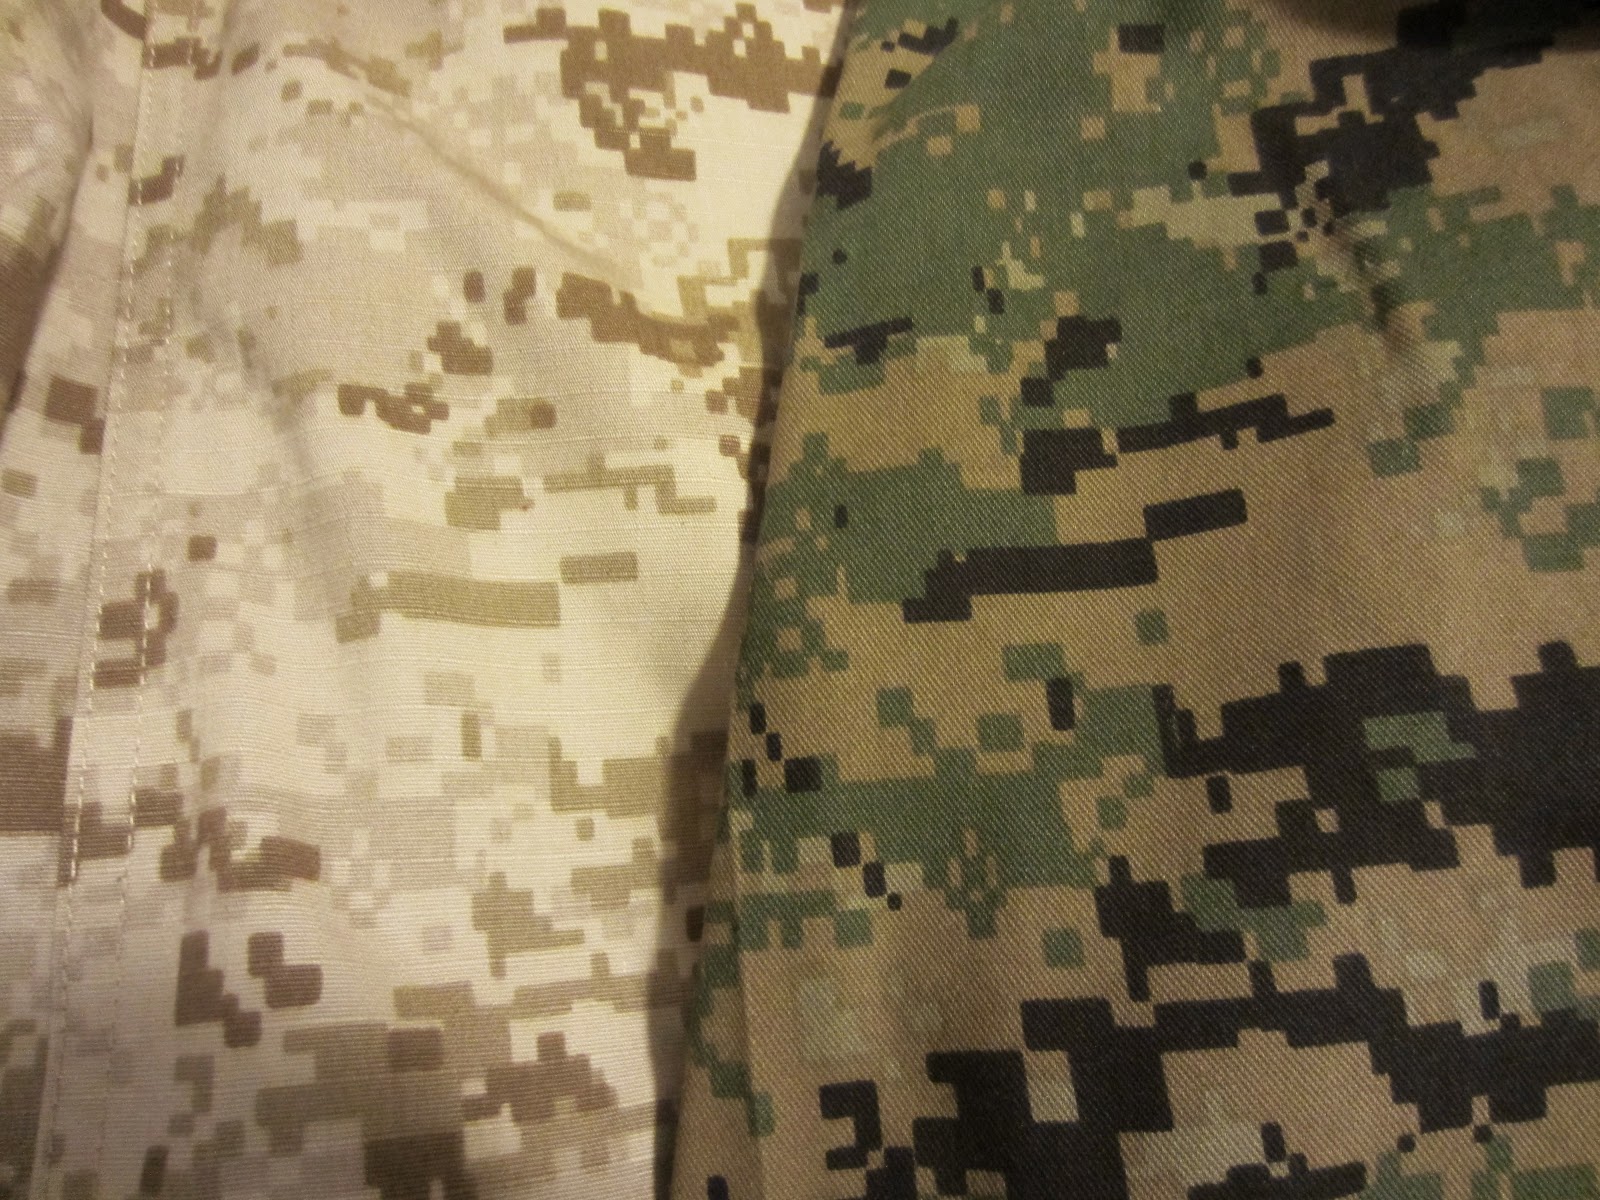 Marine Corps Camo Wallpaper So stretchedmodified pattern